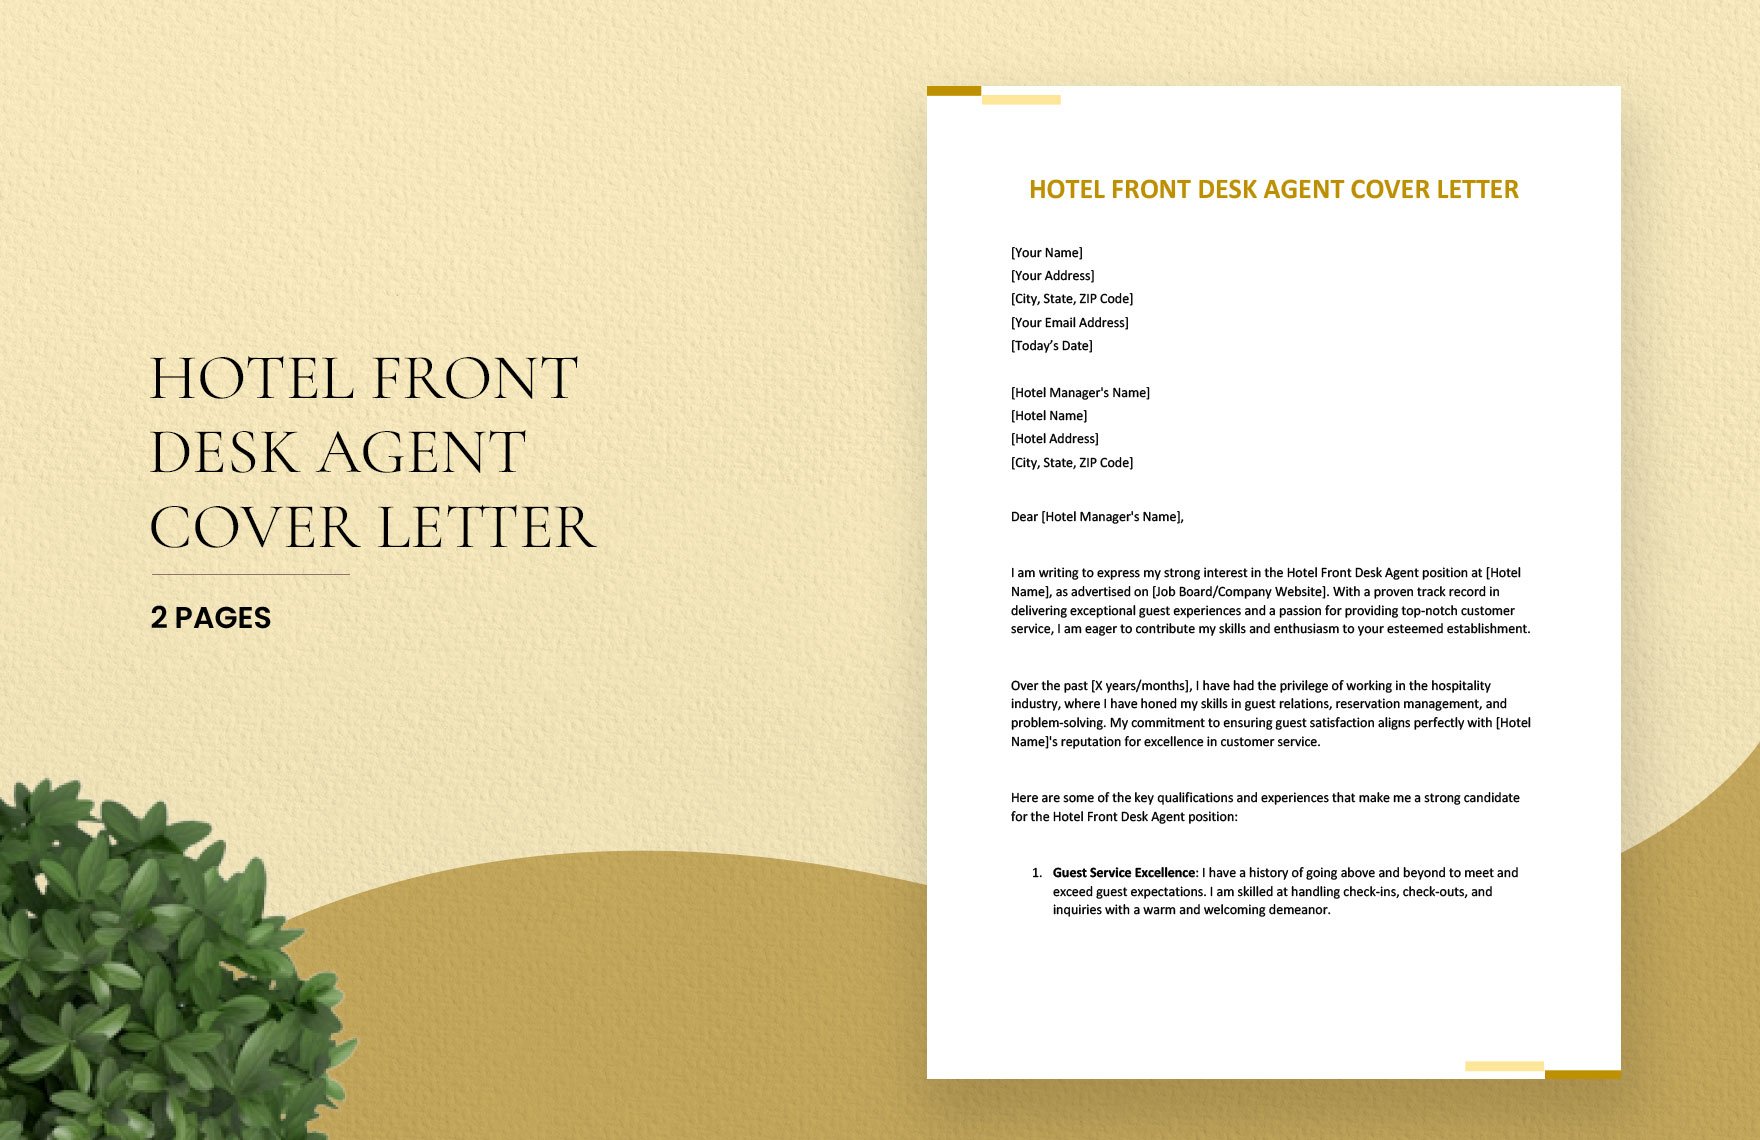 Hotel Front Desk Agent Cover Letter in Word, Google Docs